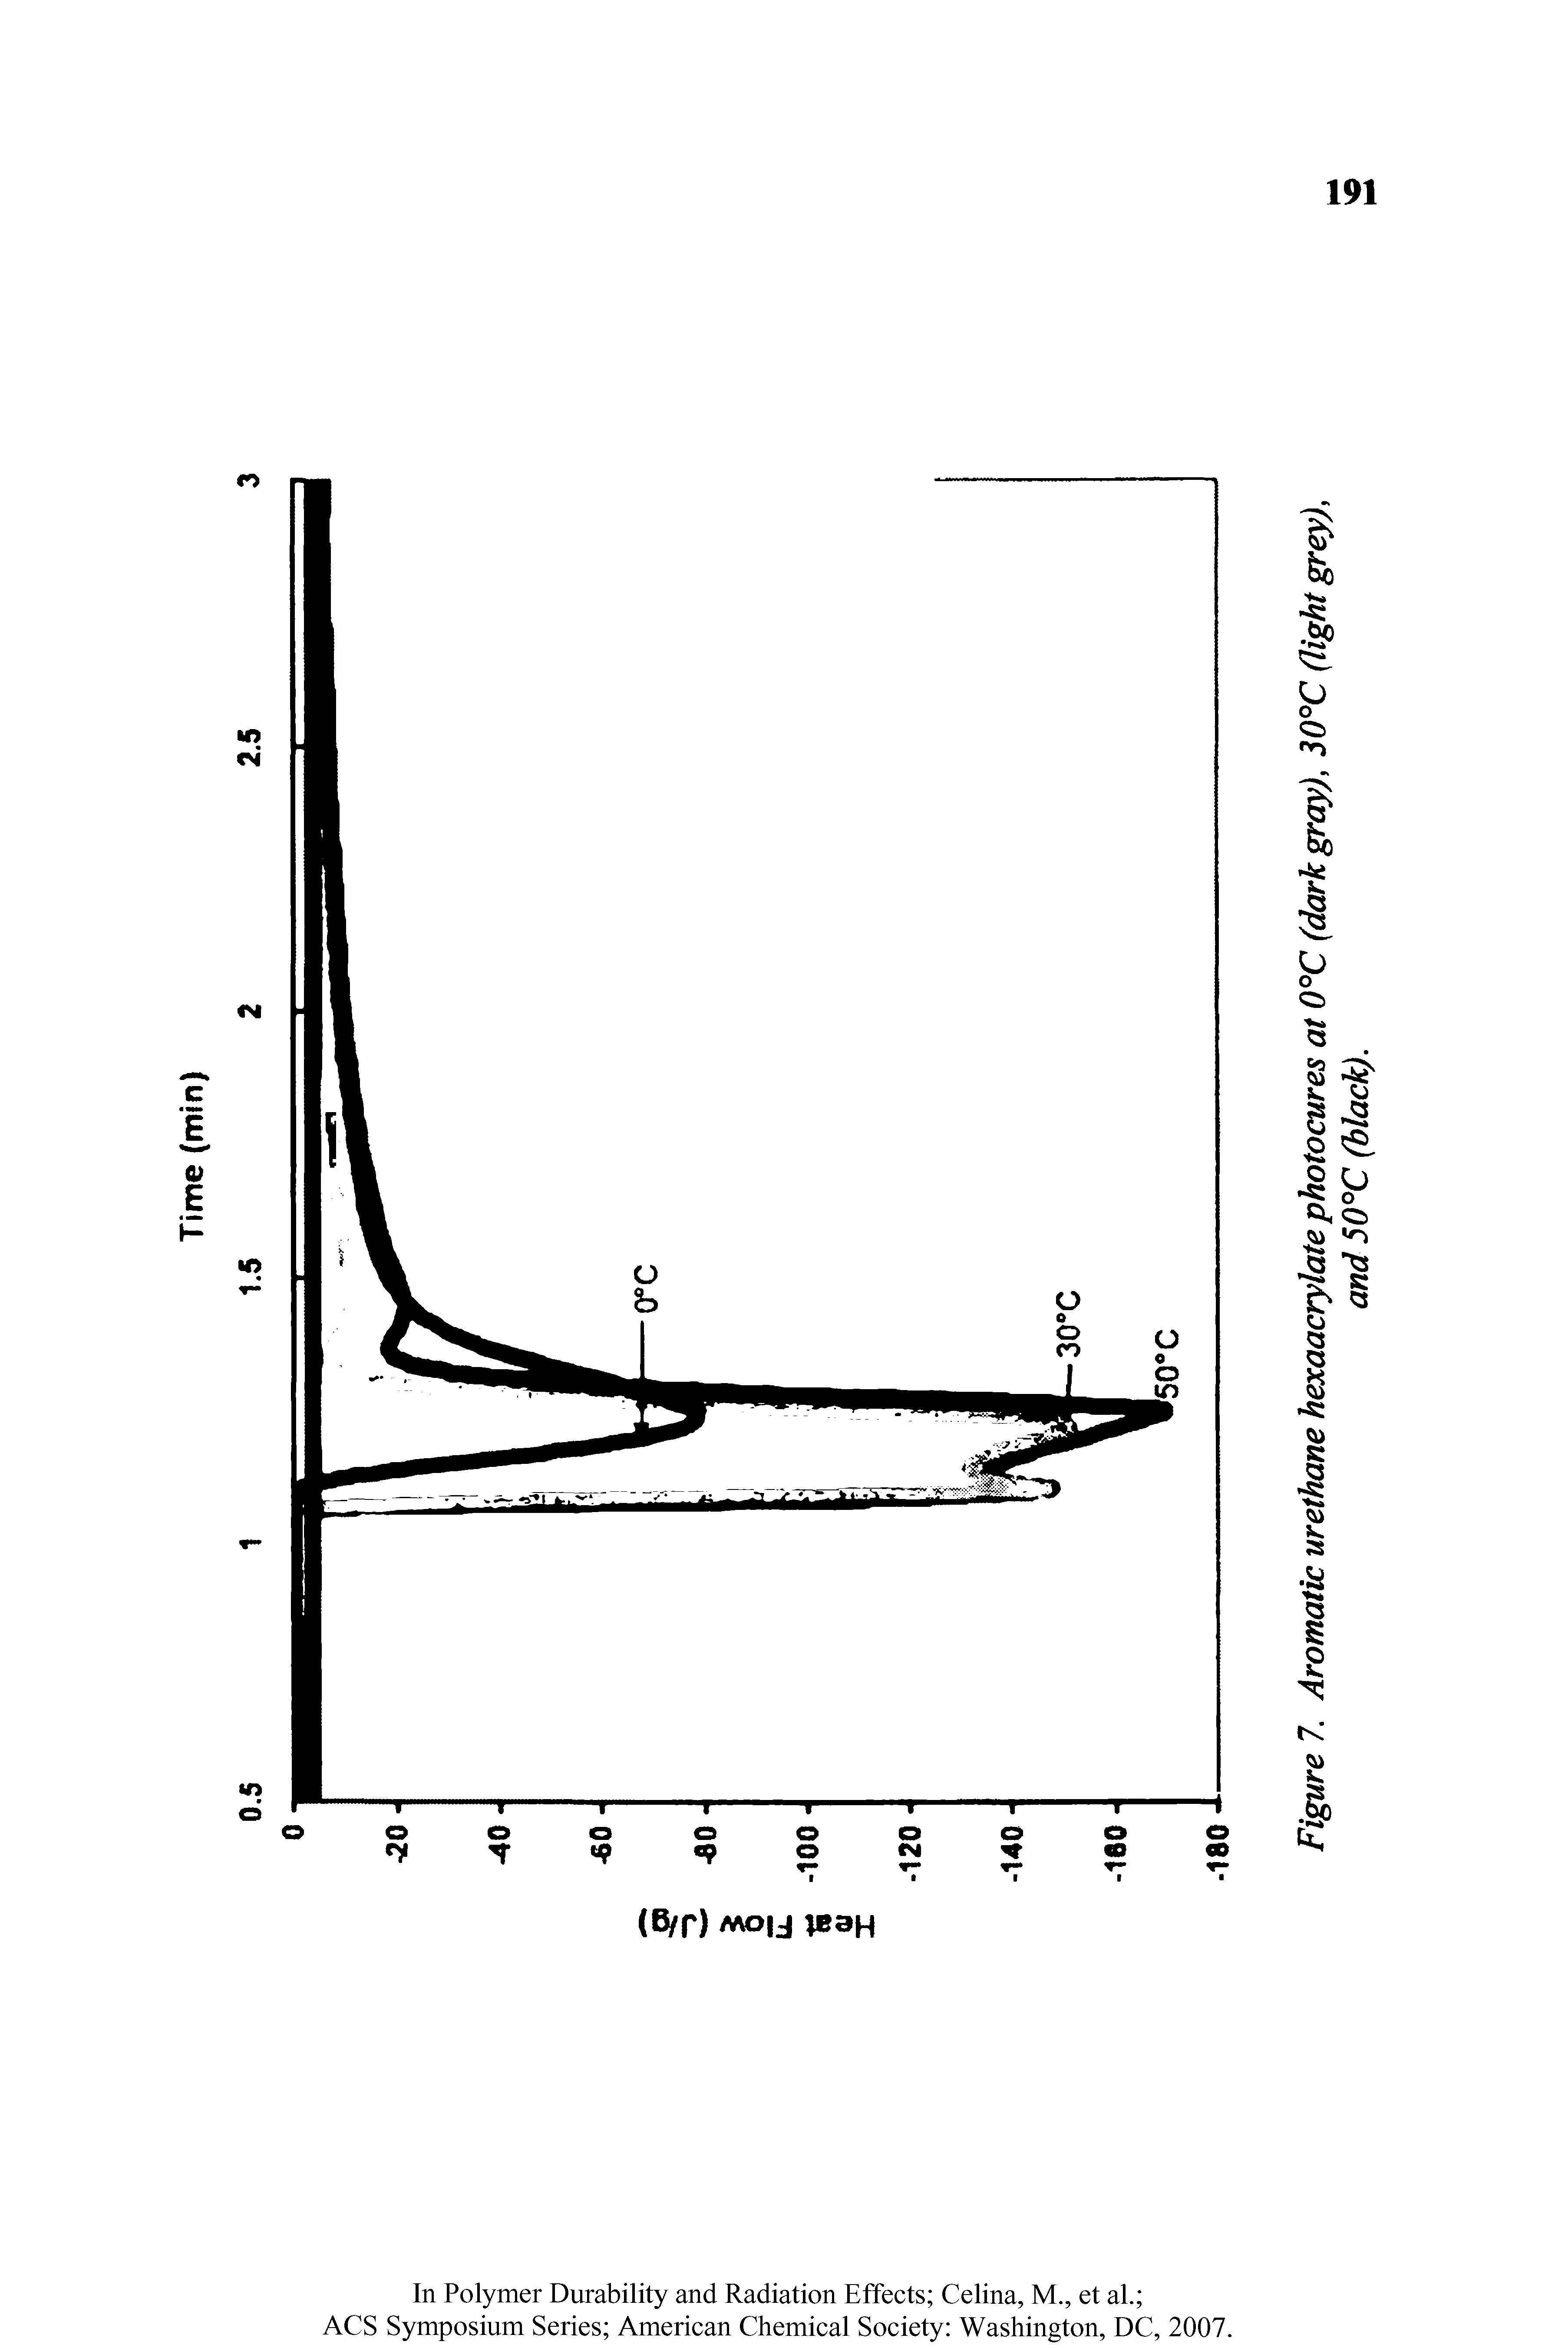 Figure 7. Aromatic urethane hexaacrylatephotocures at 0°C (dark gray), 30°C (light grey),...